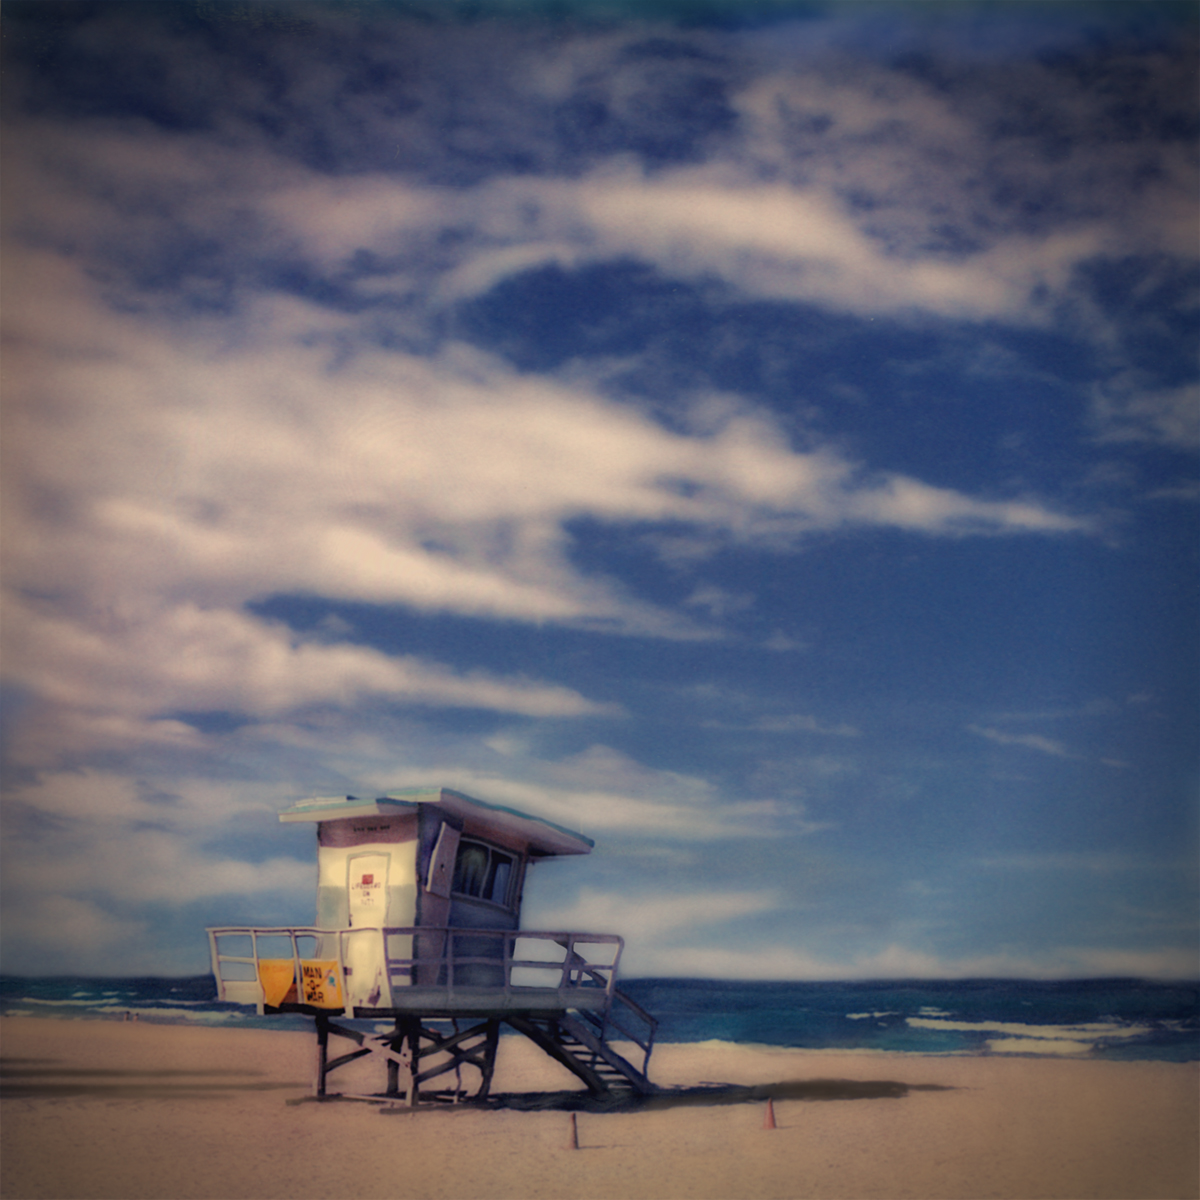 "Miami Beach Lifeguard Stand#18"